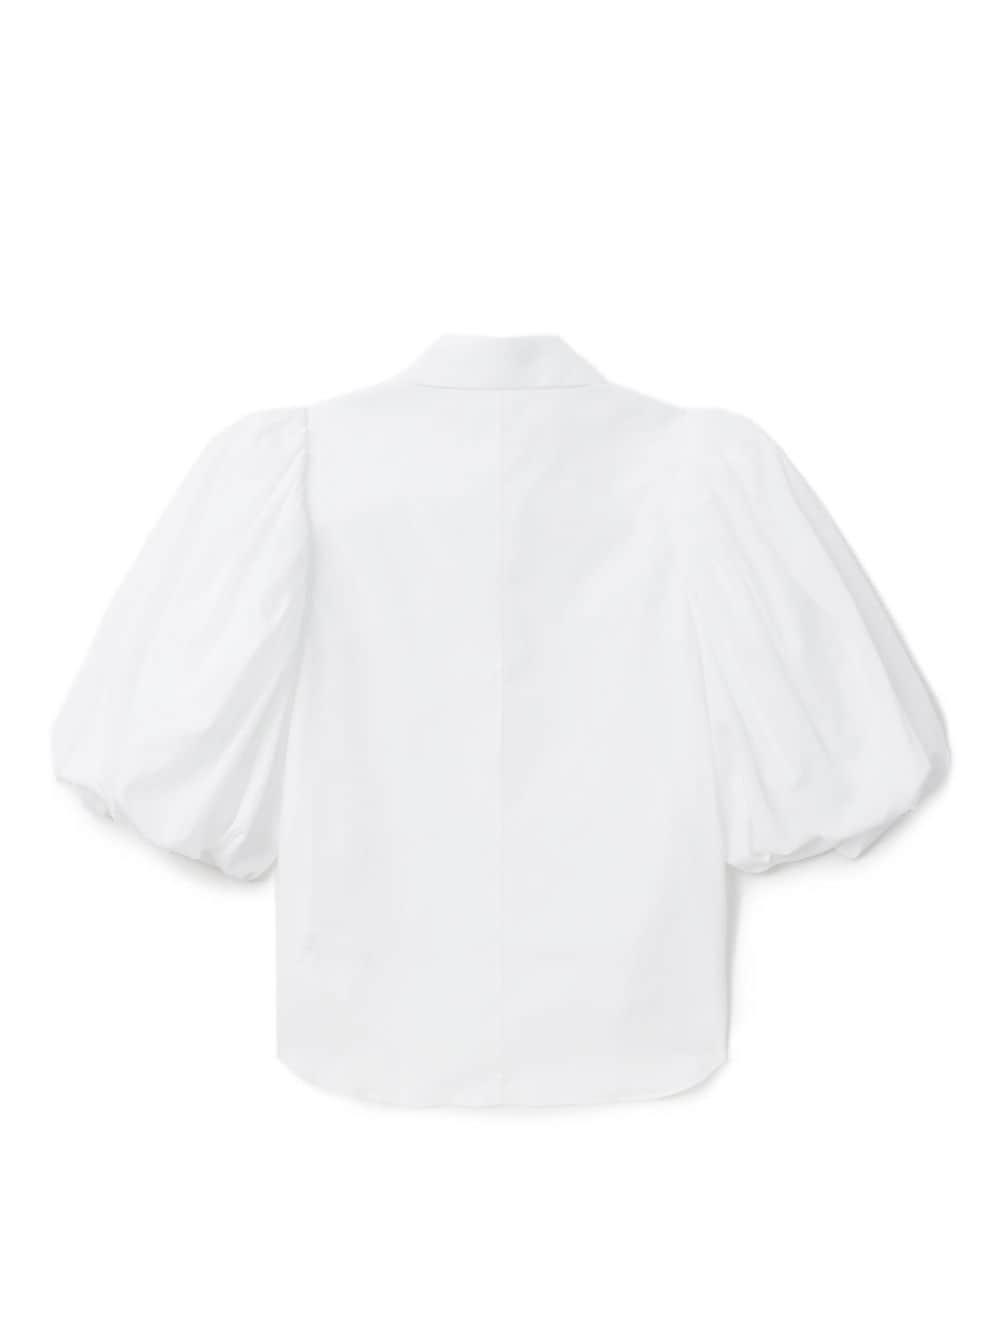 off-centre-fastening cotton shirt - 6